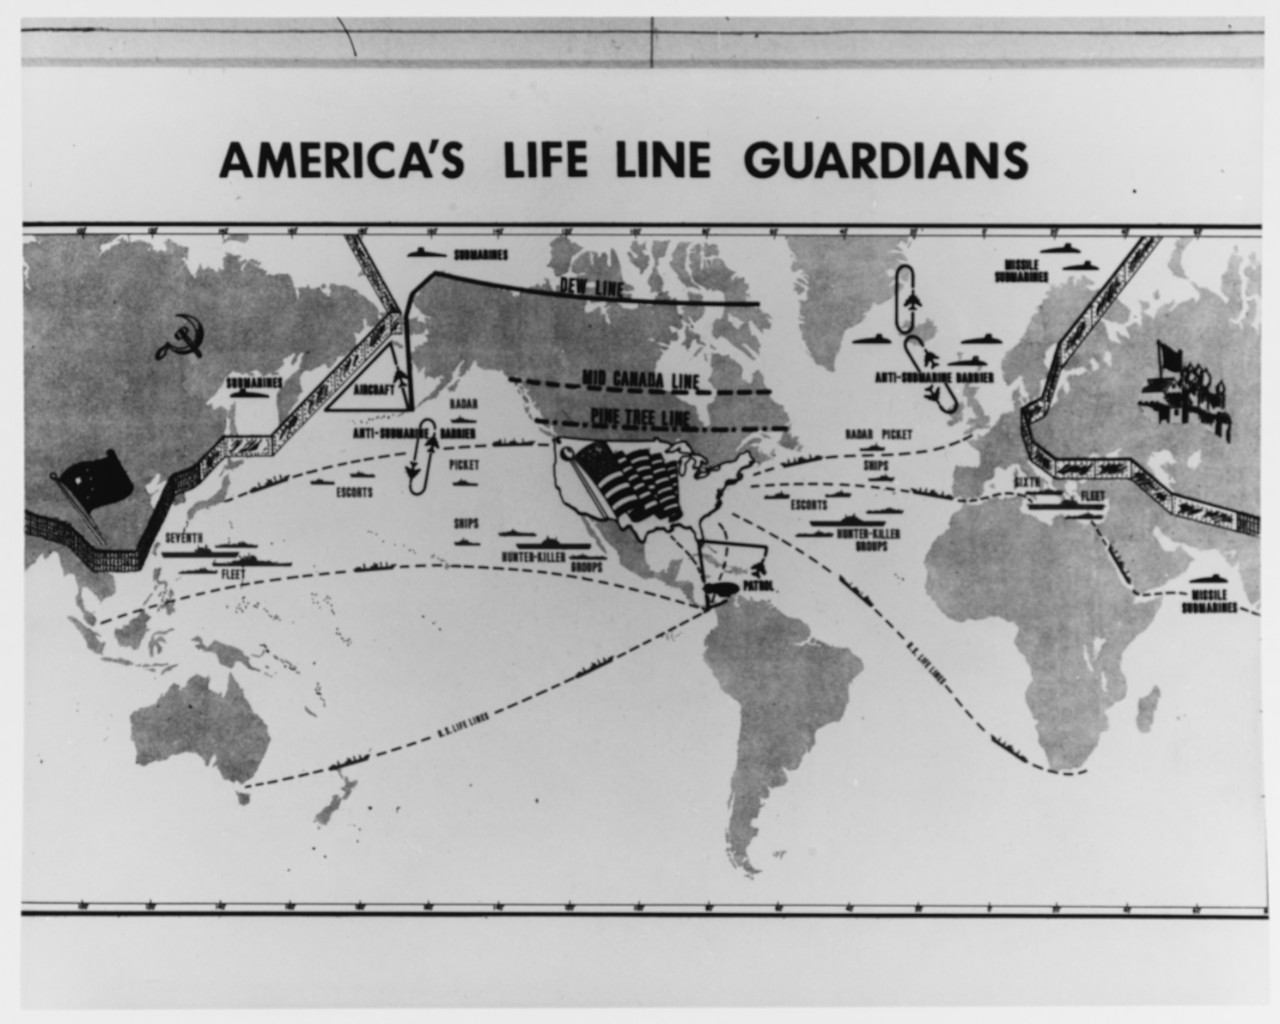 America's Life Line Guardians